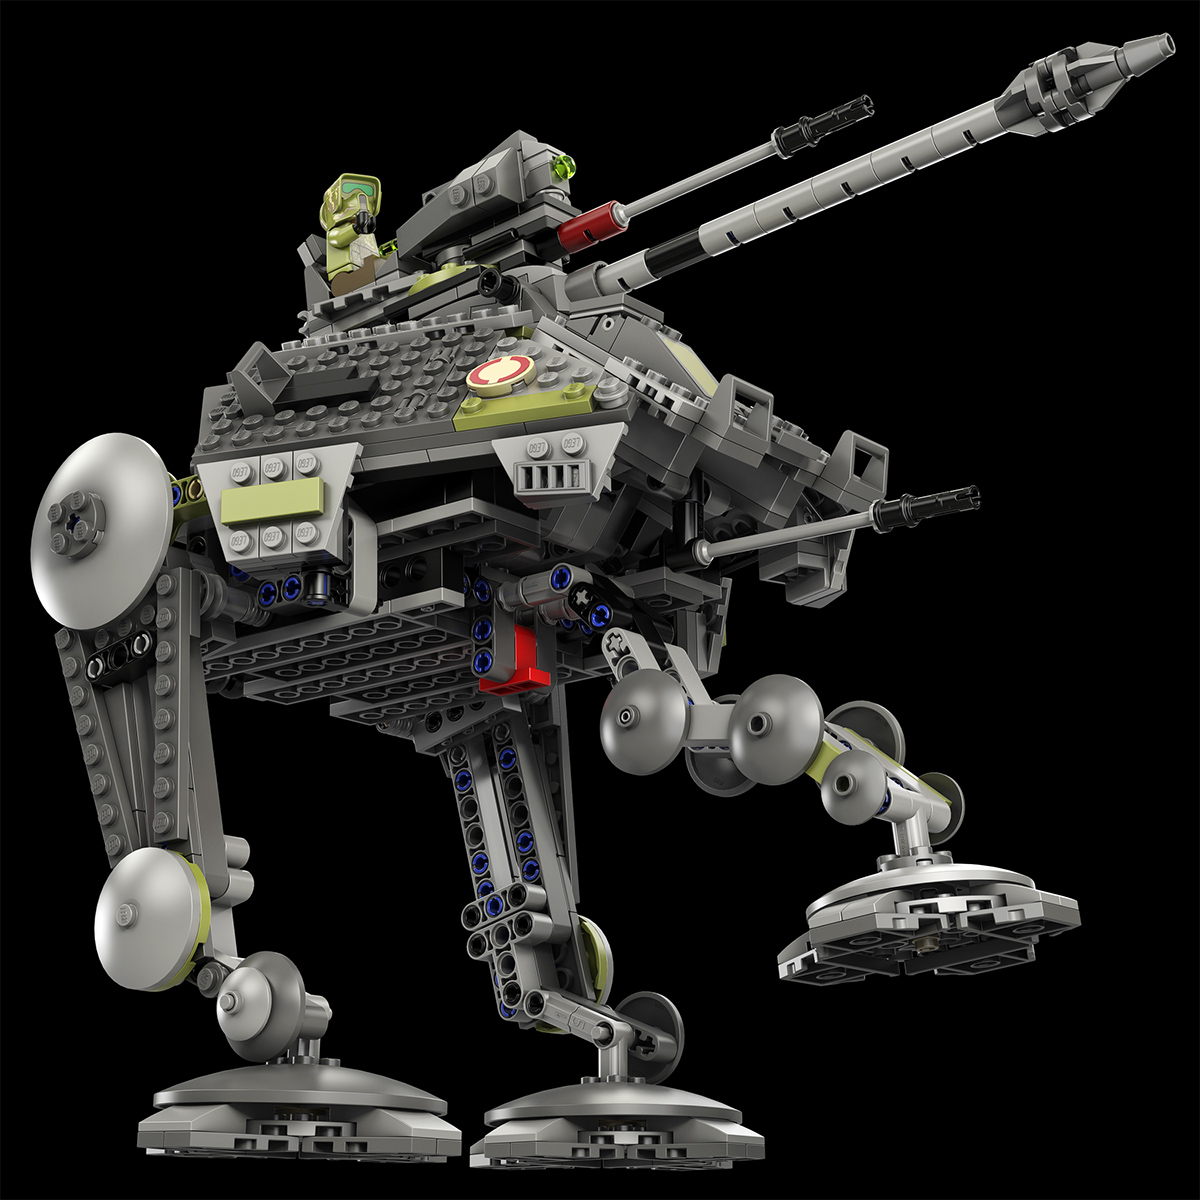 Adobe Portfolio star wars LEGO LEGO Star Wars toys Legos